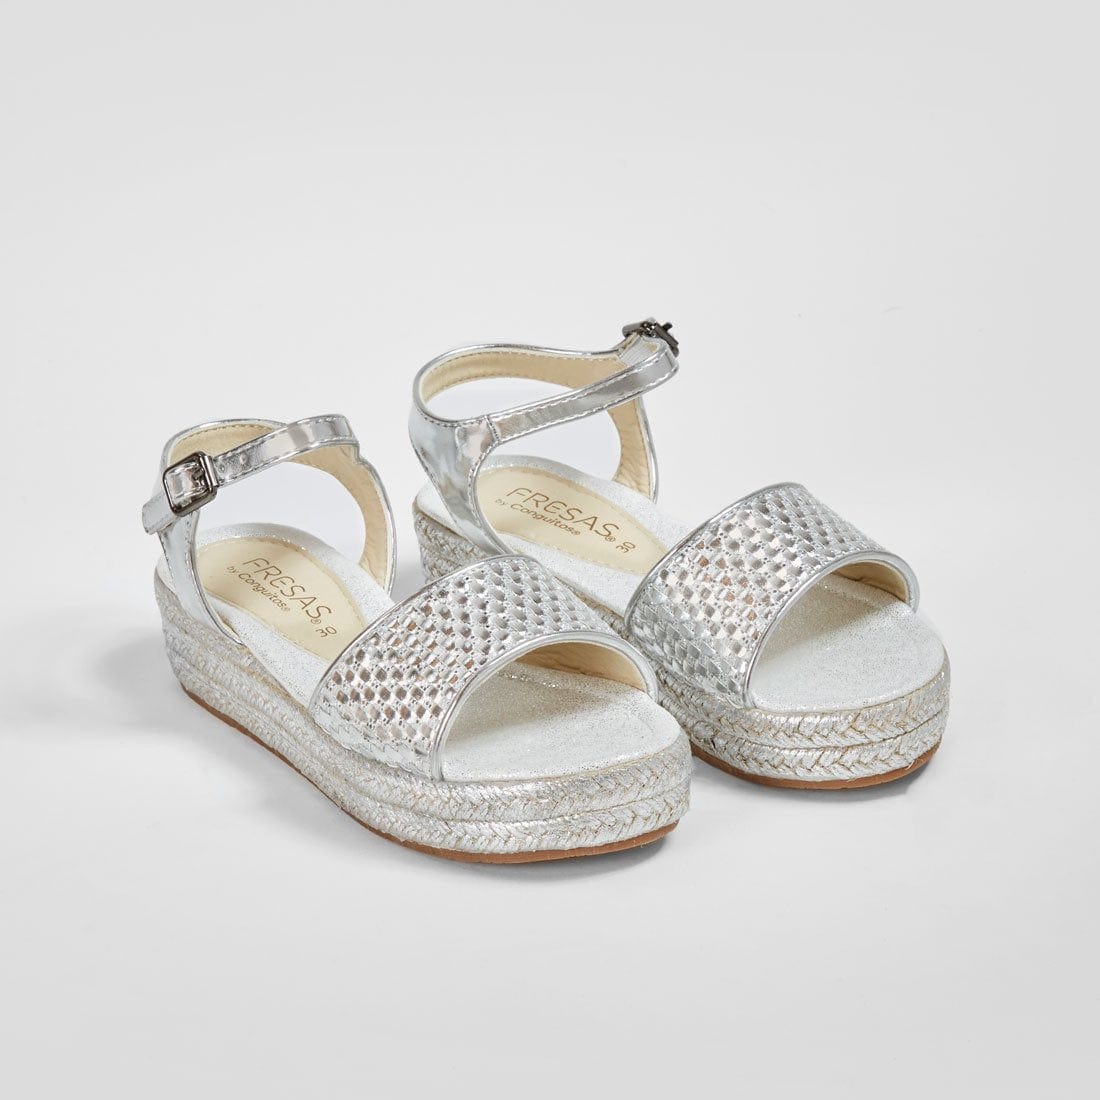 FRESAS CON NATA Shoes Girl's Metallic Silver Wedge Braided Sandals